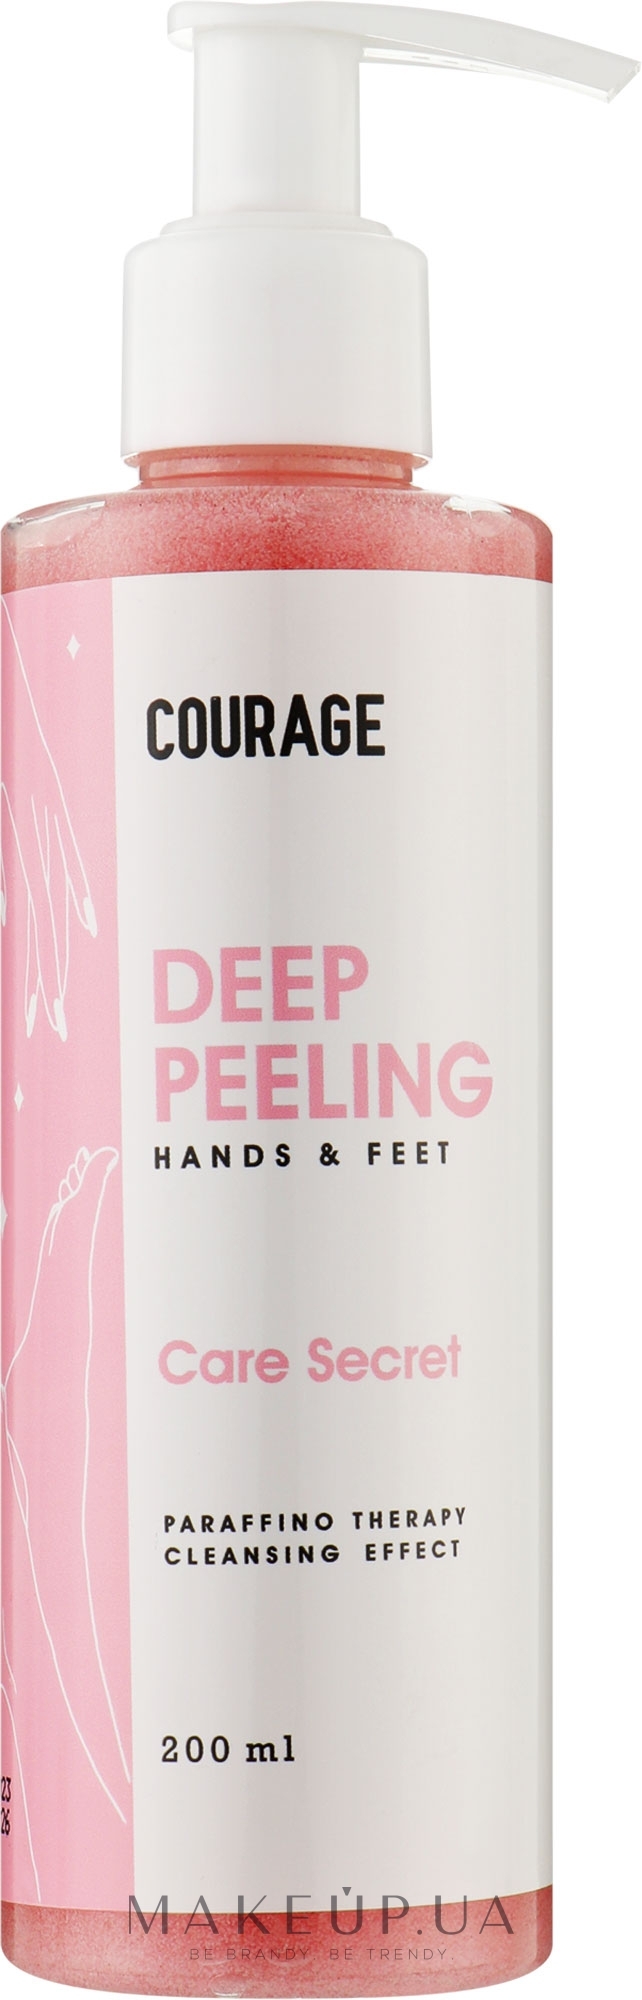 Пилинг-эксфолиант для рук и стоп - Courage Deep Peeling Hands & Feet — фото 200ml